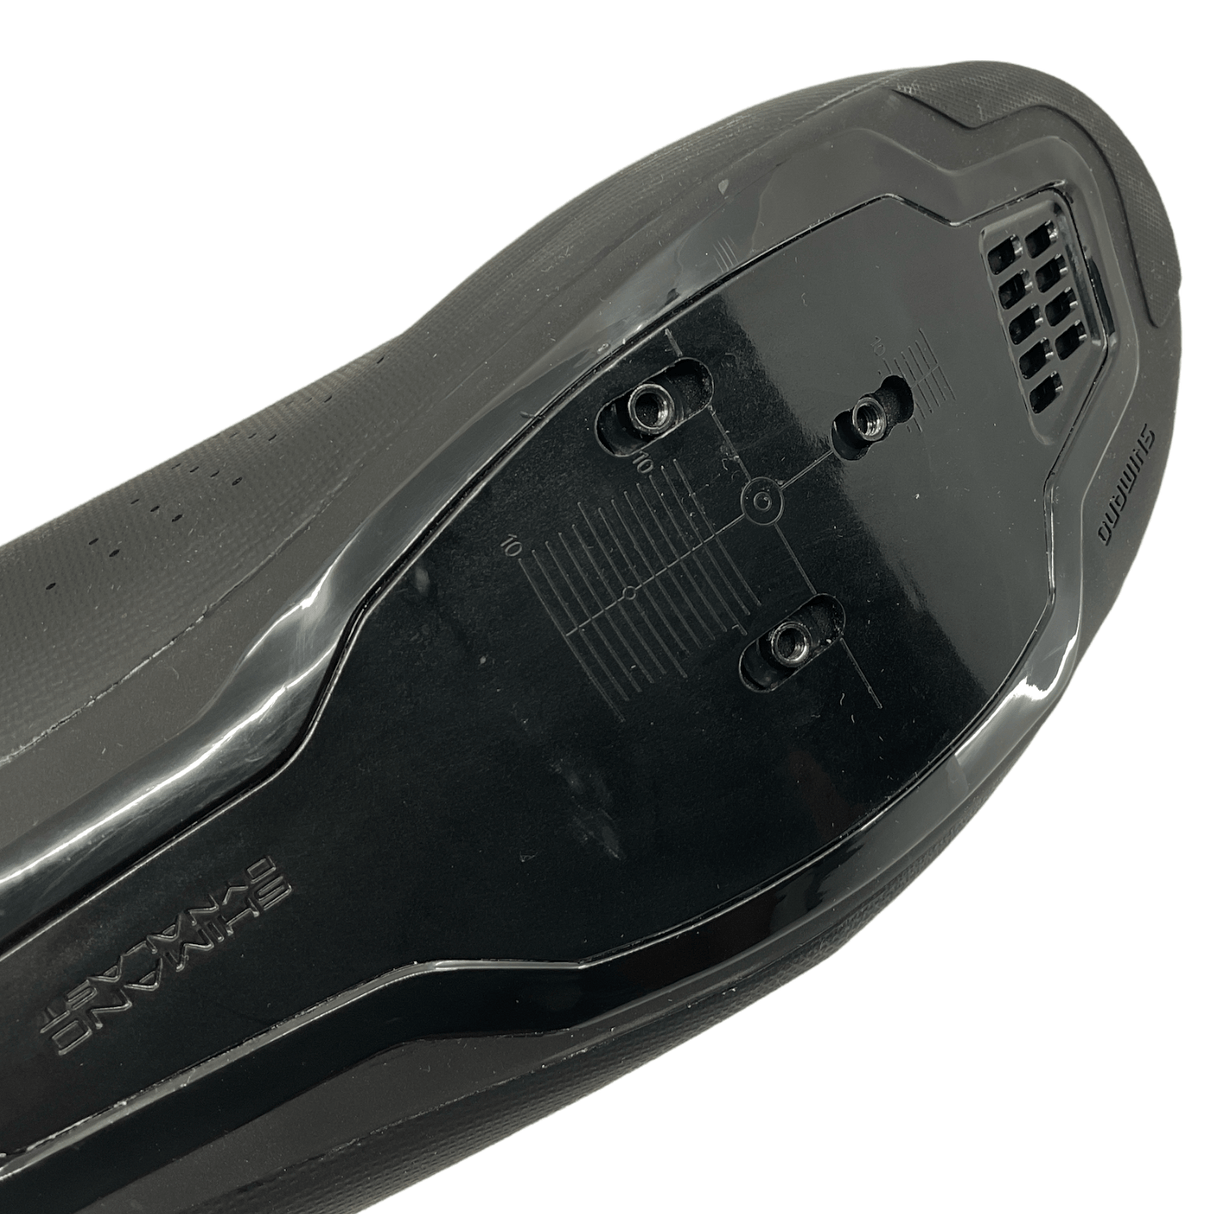 Shimano RC3 (RC300) SPD-SL Shoes, Black, Size 52 Wide Custom Return